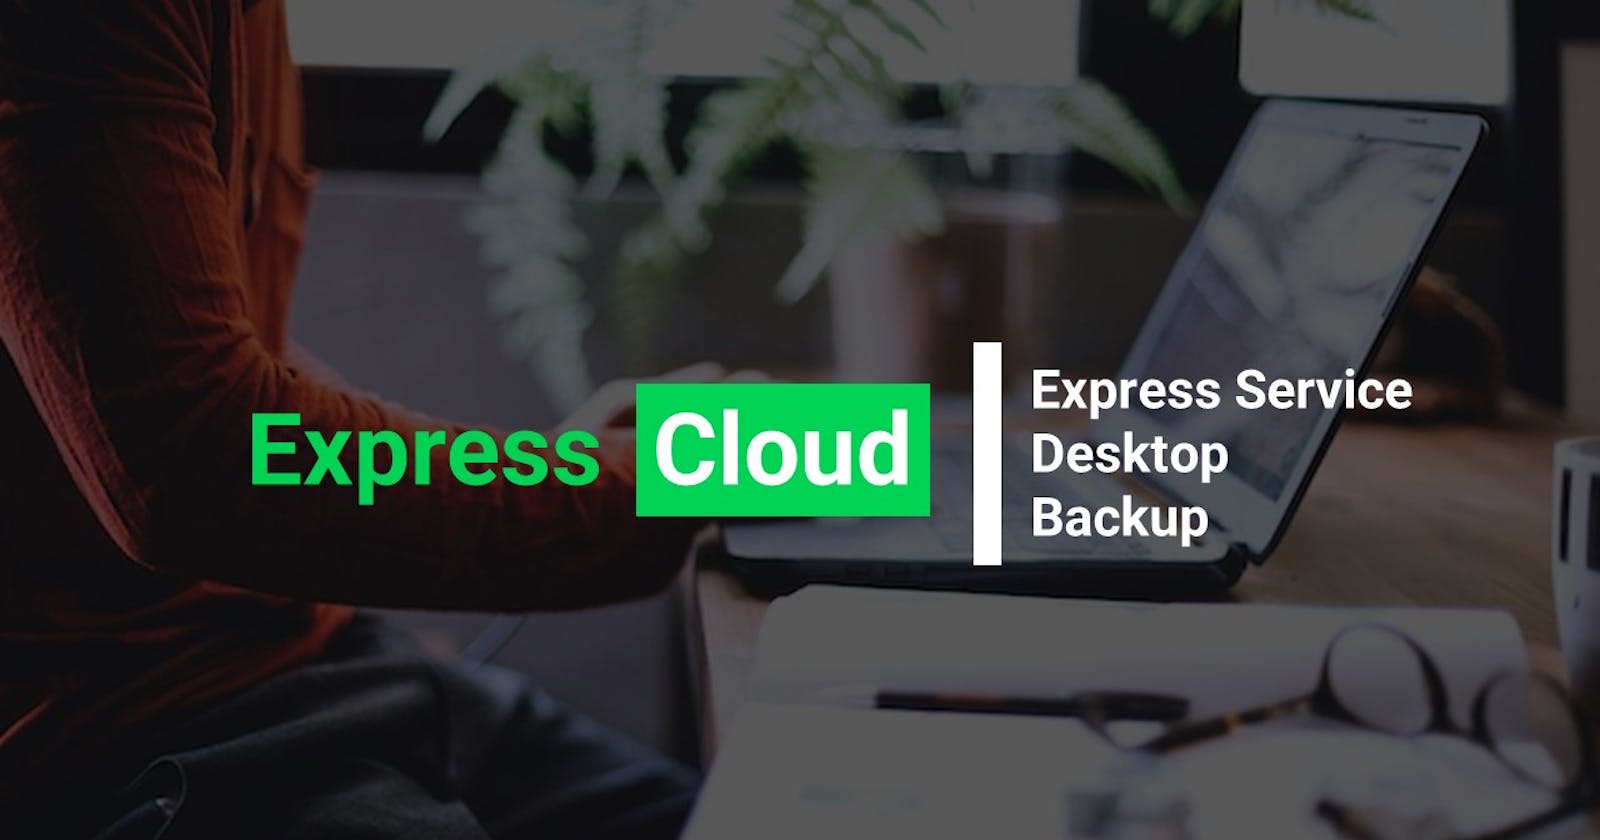 Express Service Desktop Backup